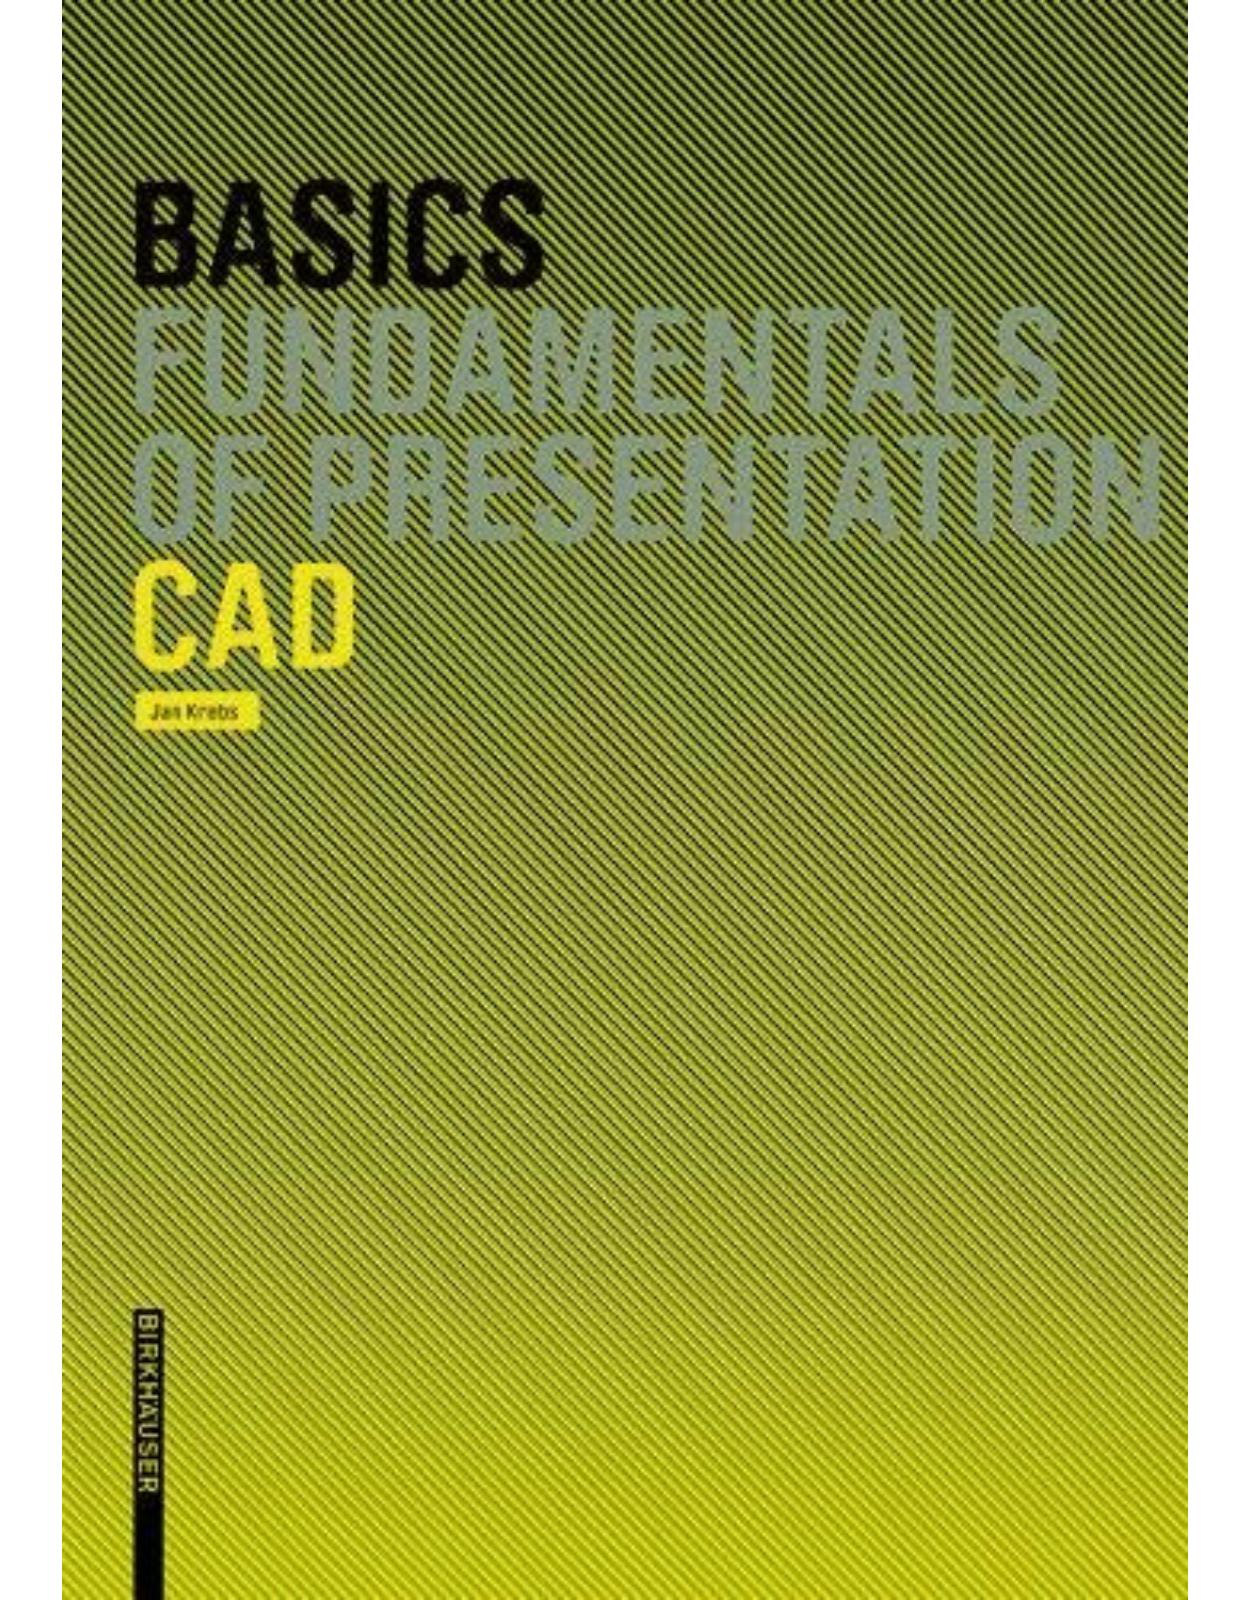 Basics - CAD